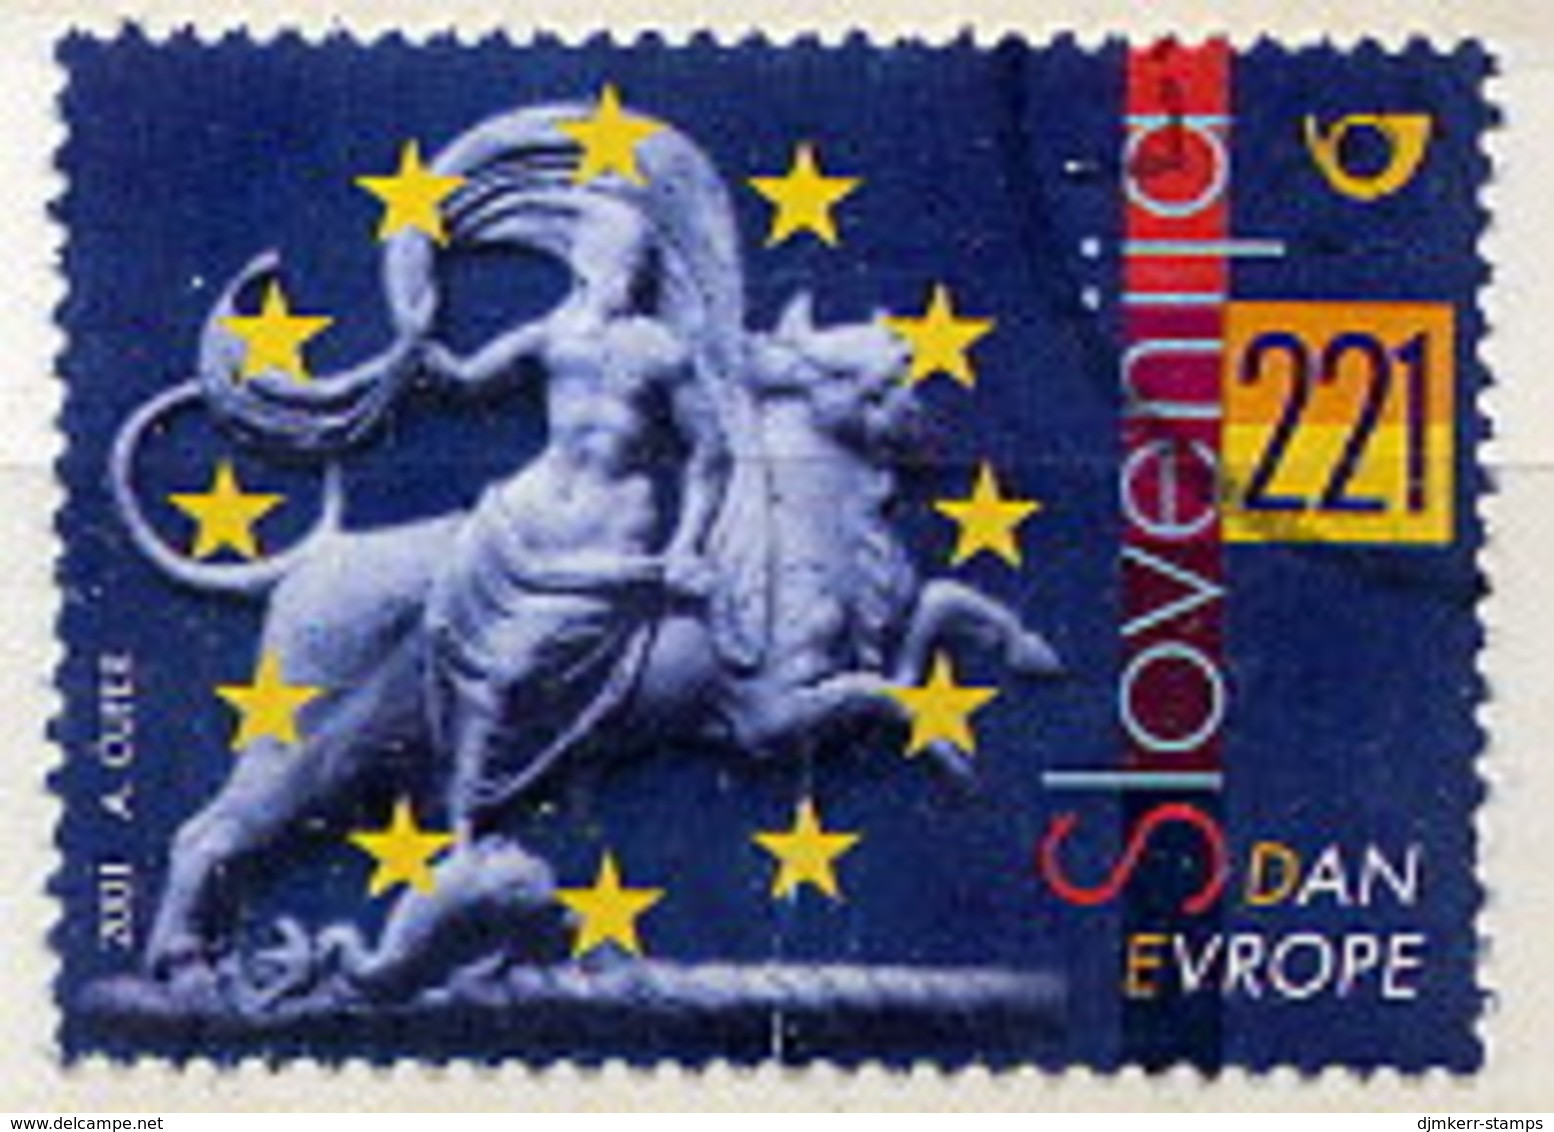 SLOVENIA 2001 Europe Day Used. Michel 348 - Slowenien